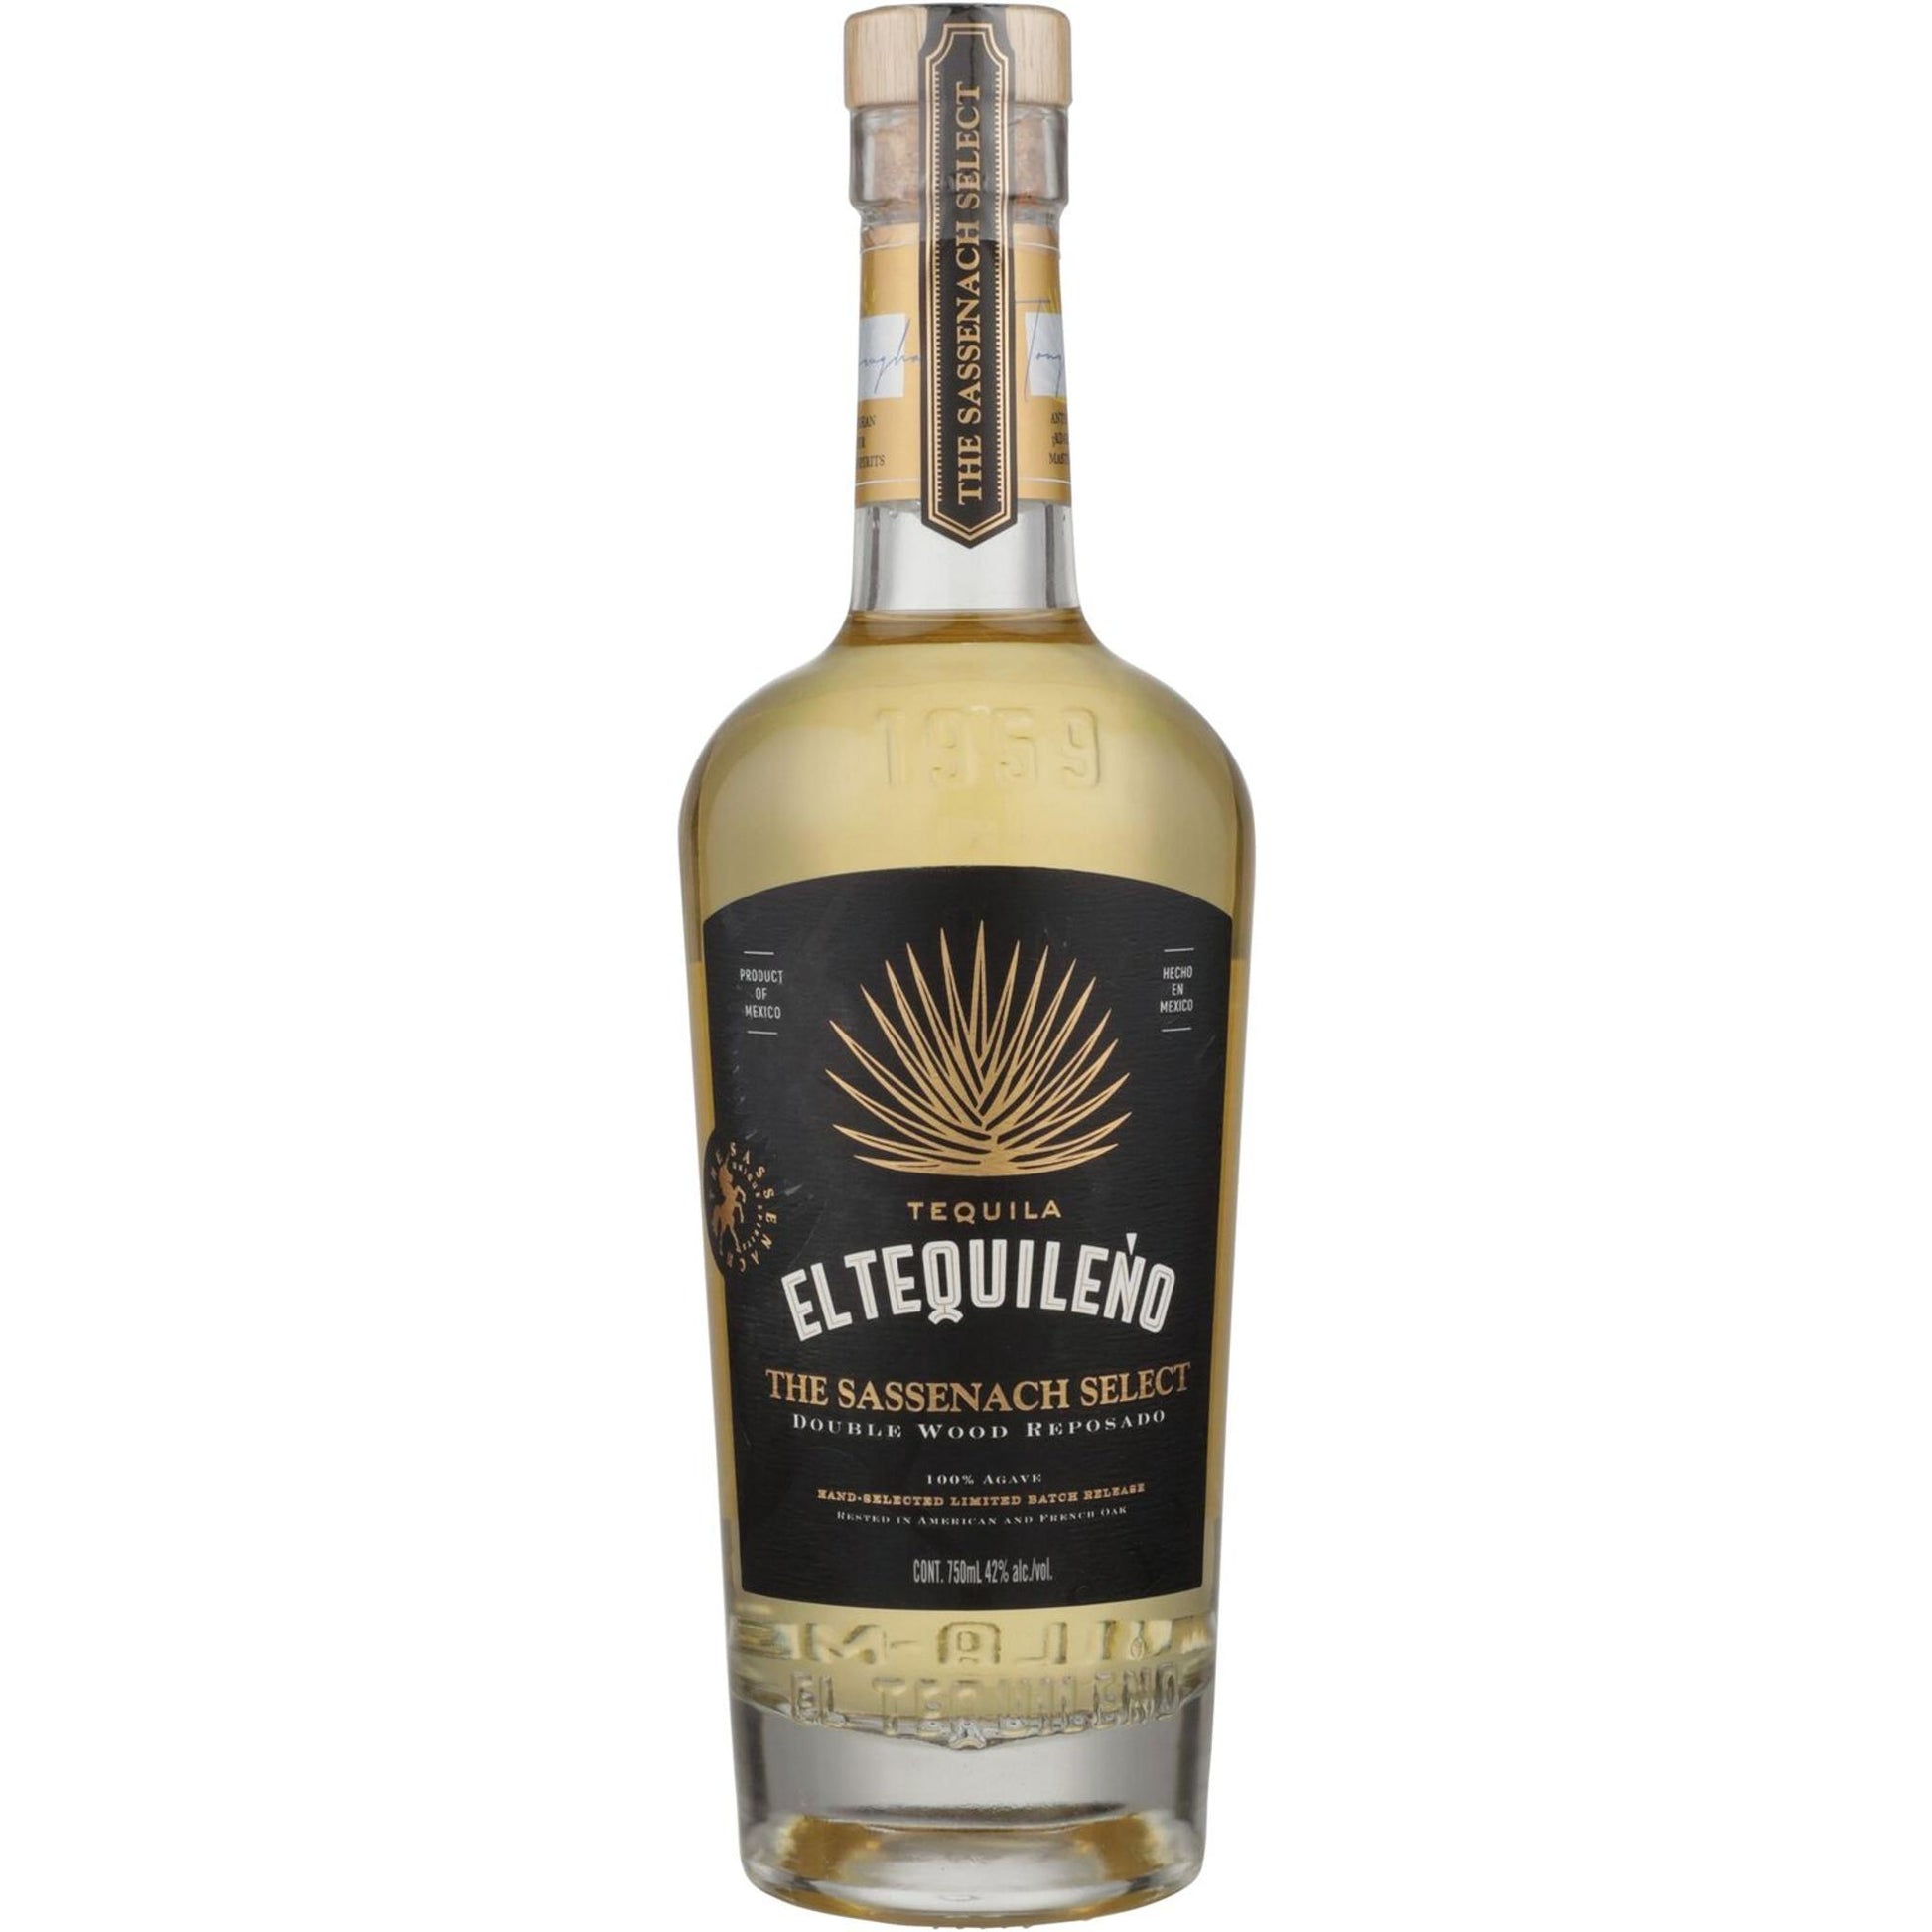 EL Tequileno Tequila The Sassenach SELect Double Wood Reposado - Liquor Geeks